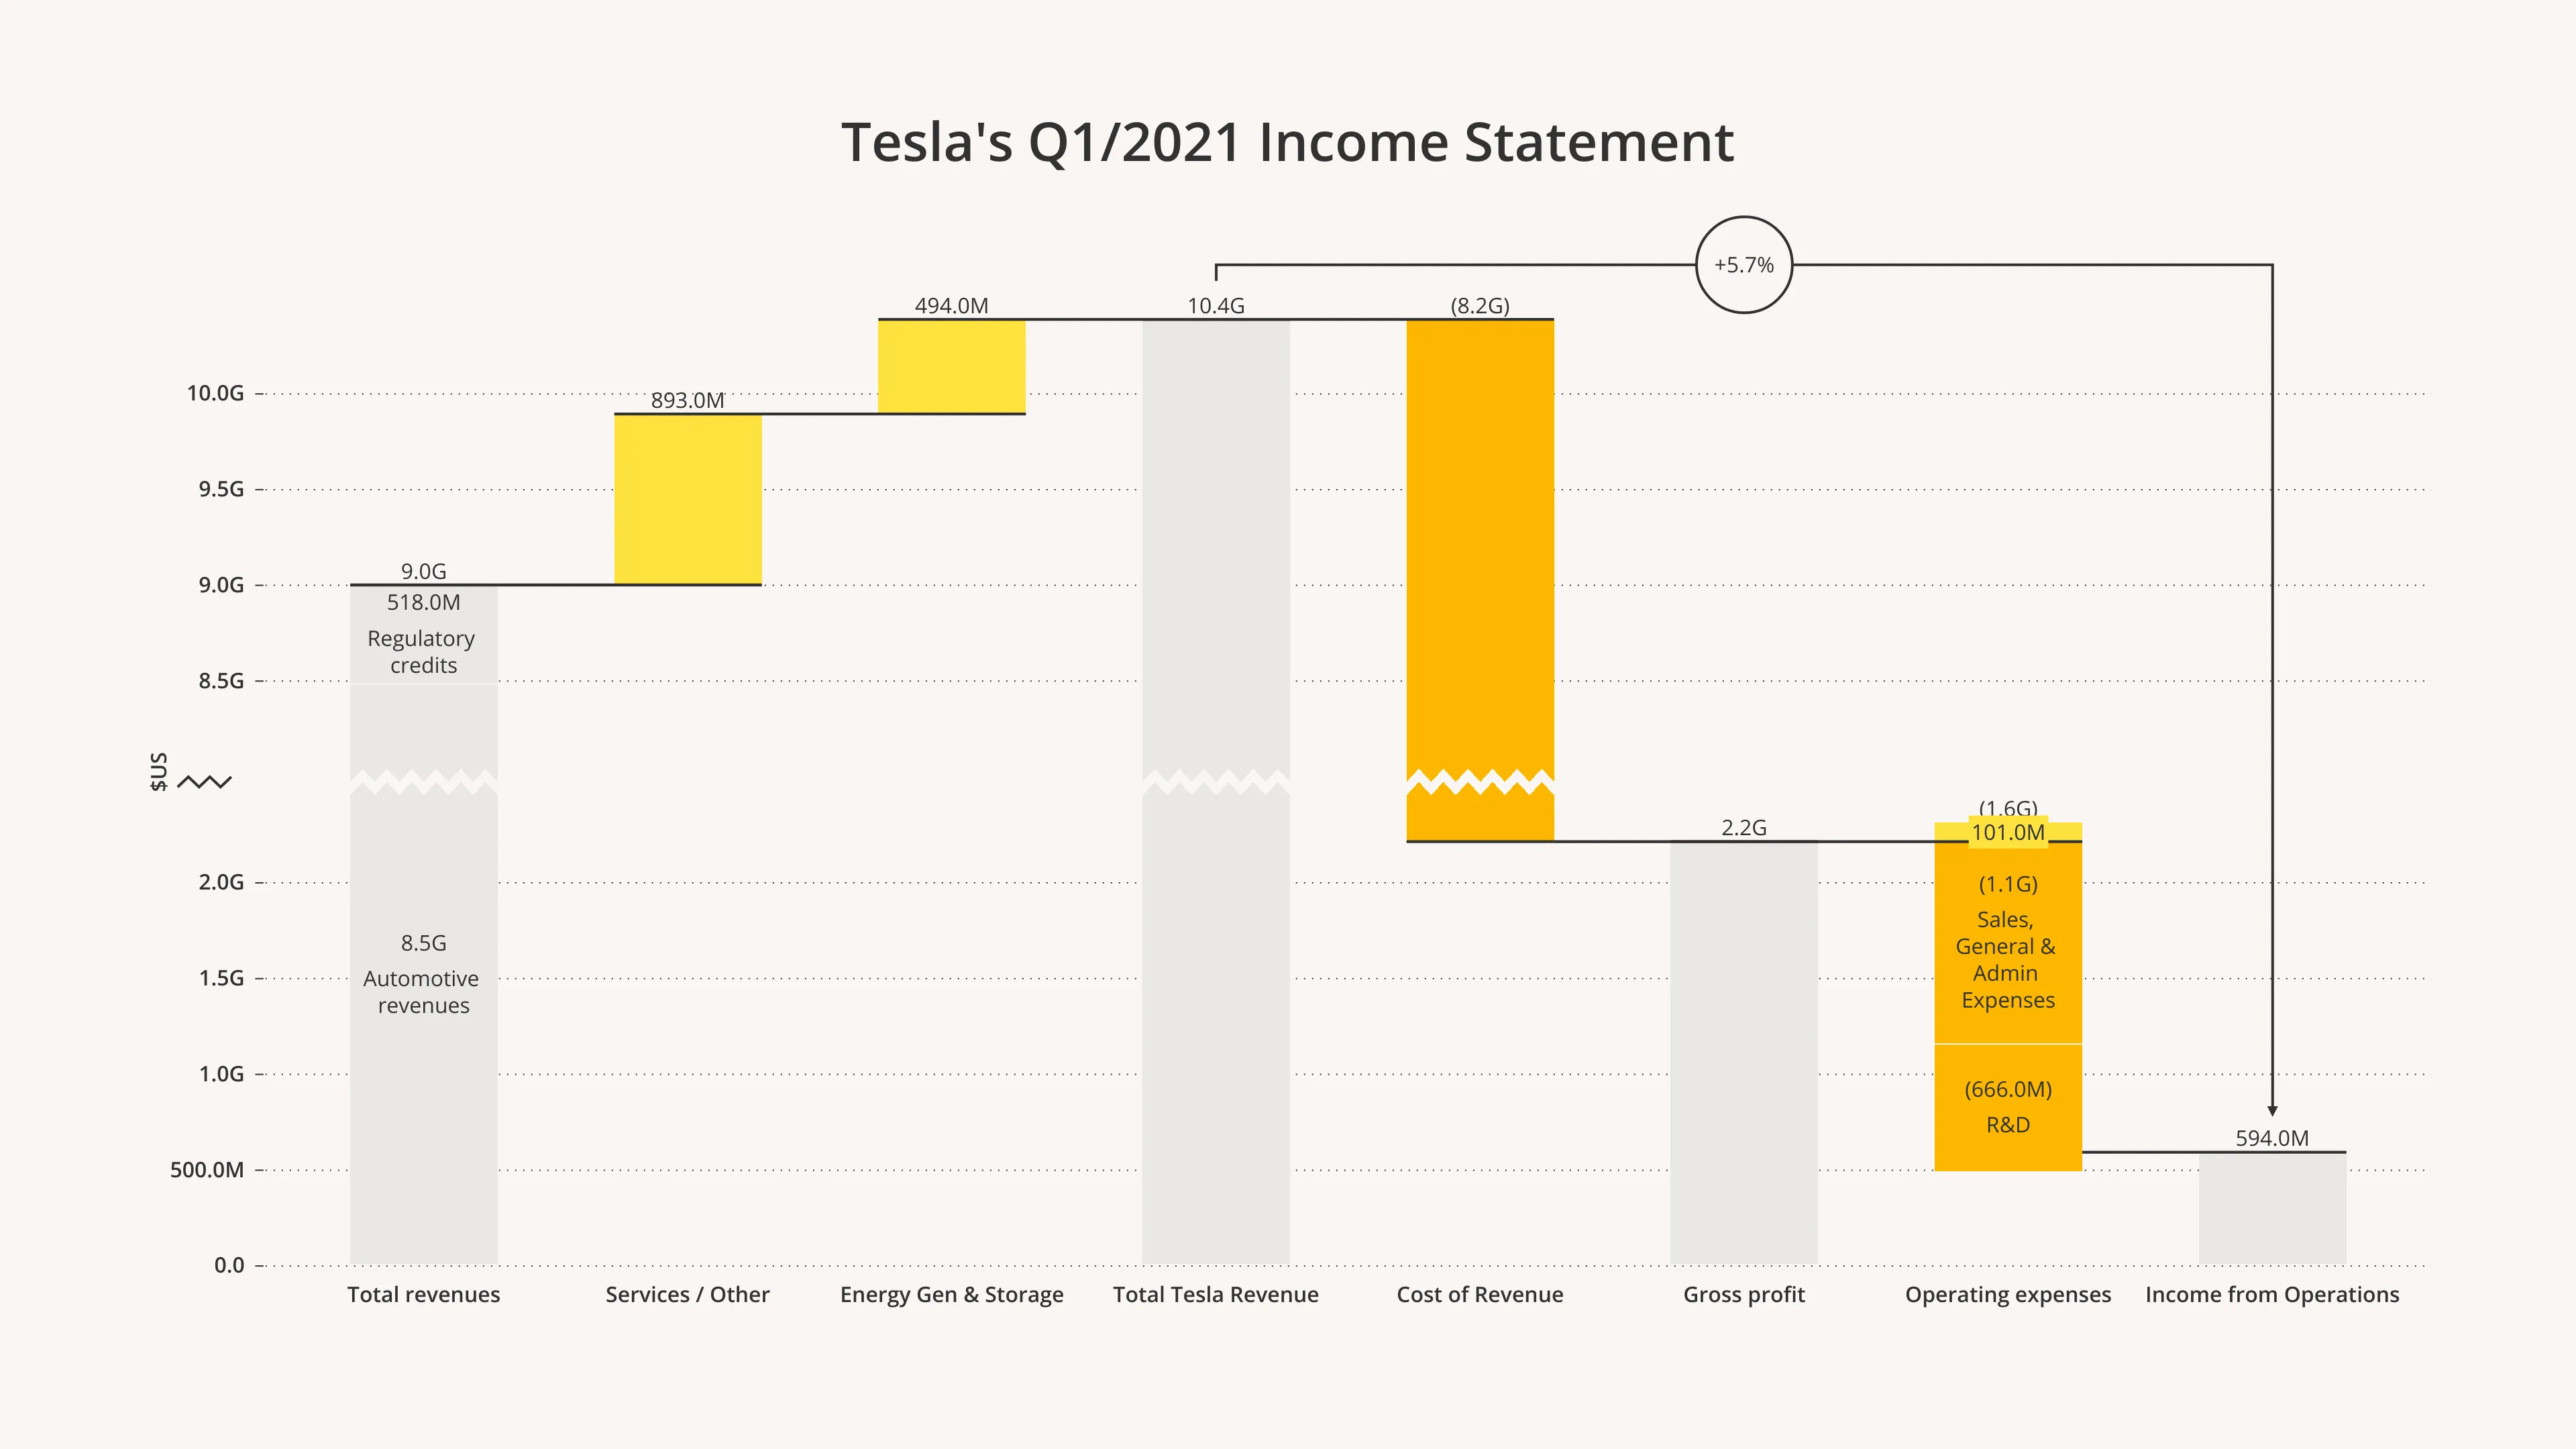 Tesla's Q1/2021 Income Statement